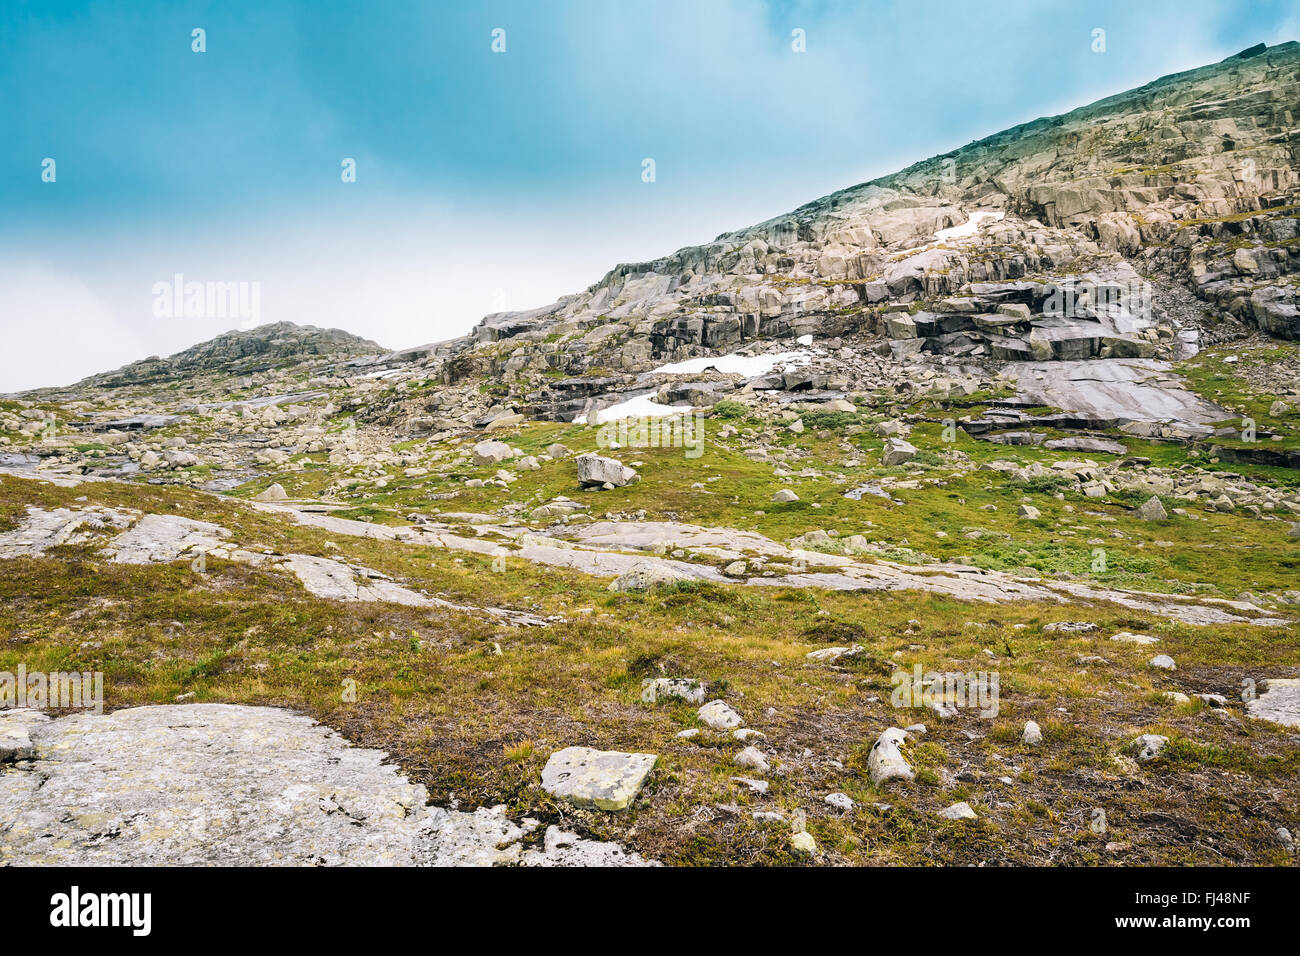 Natur der norwegischen Berge Landschaft. Natur von Norwegen Stockfoto